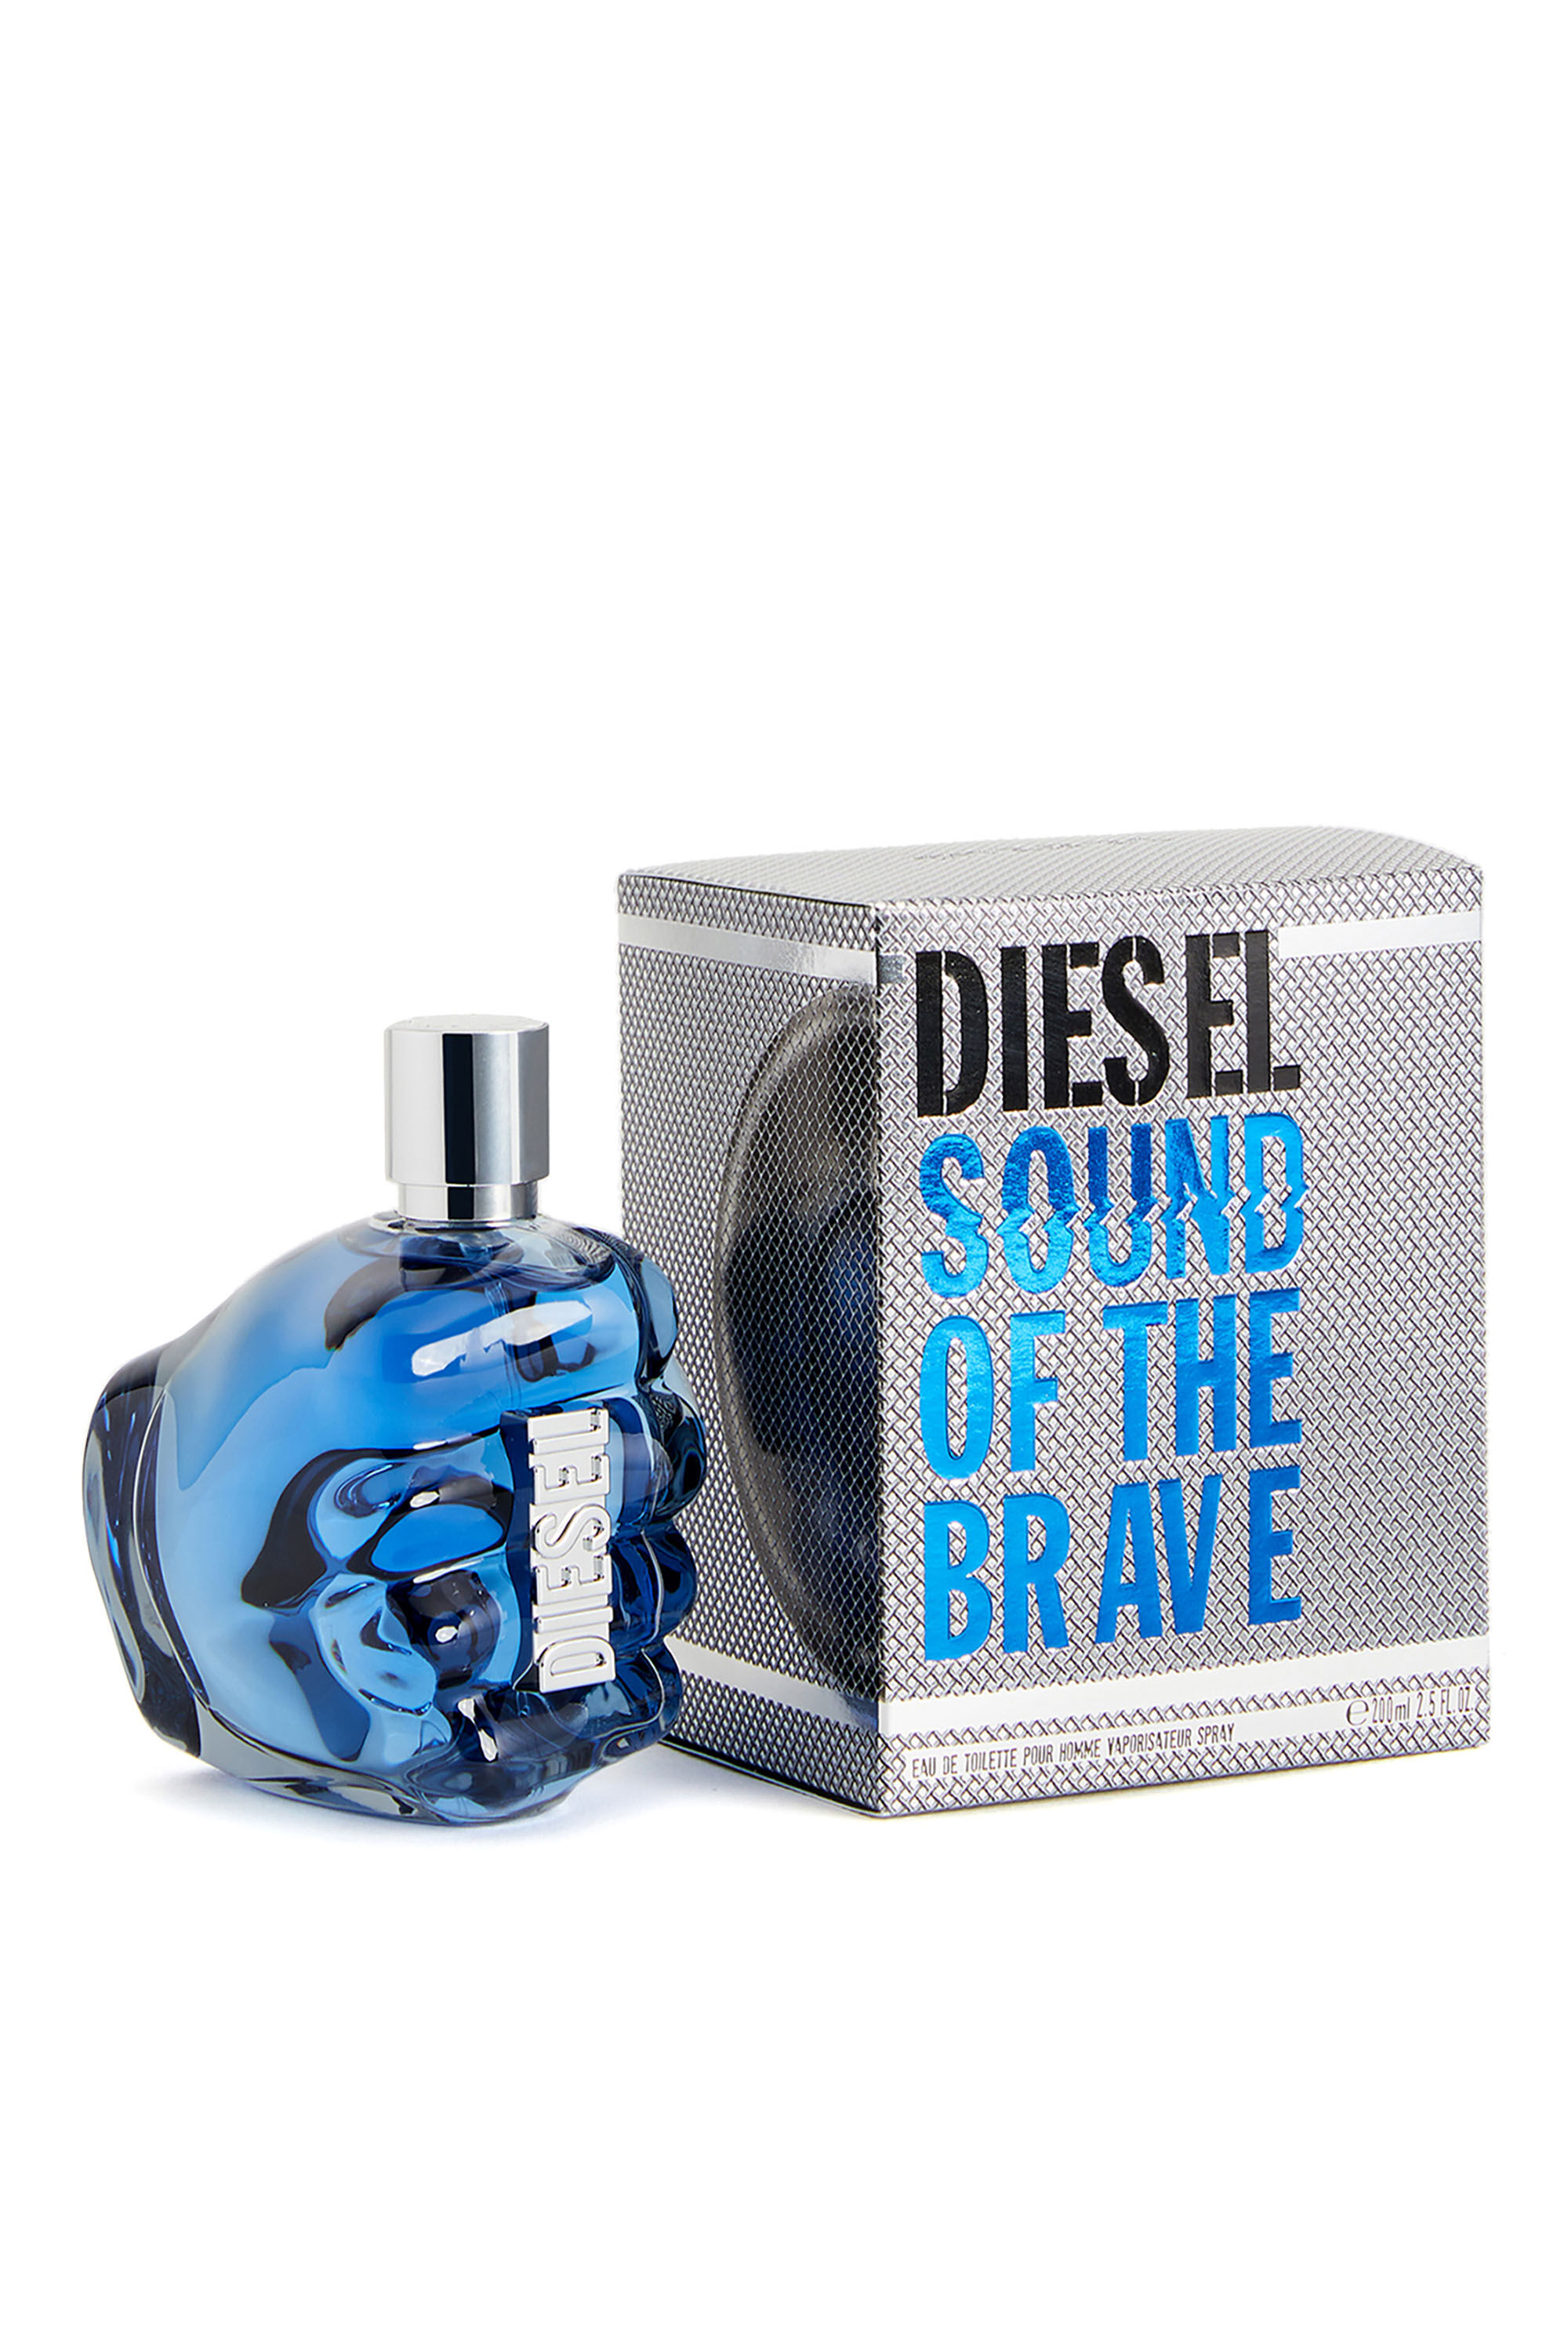 Diesel - SOUND OF THE BRAVE 200ML, Azul - Image 3